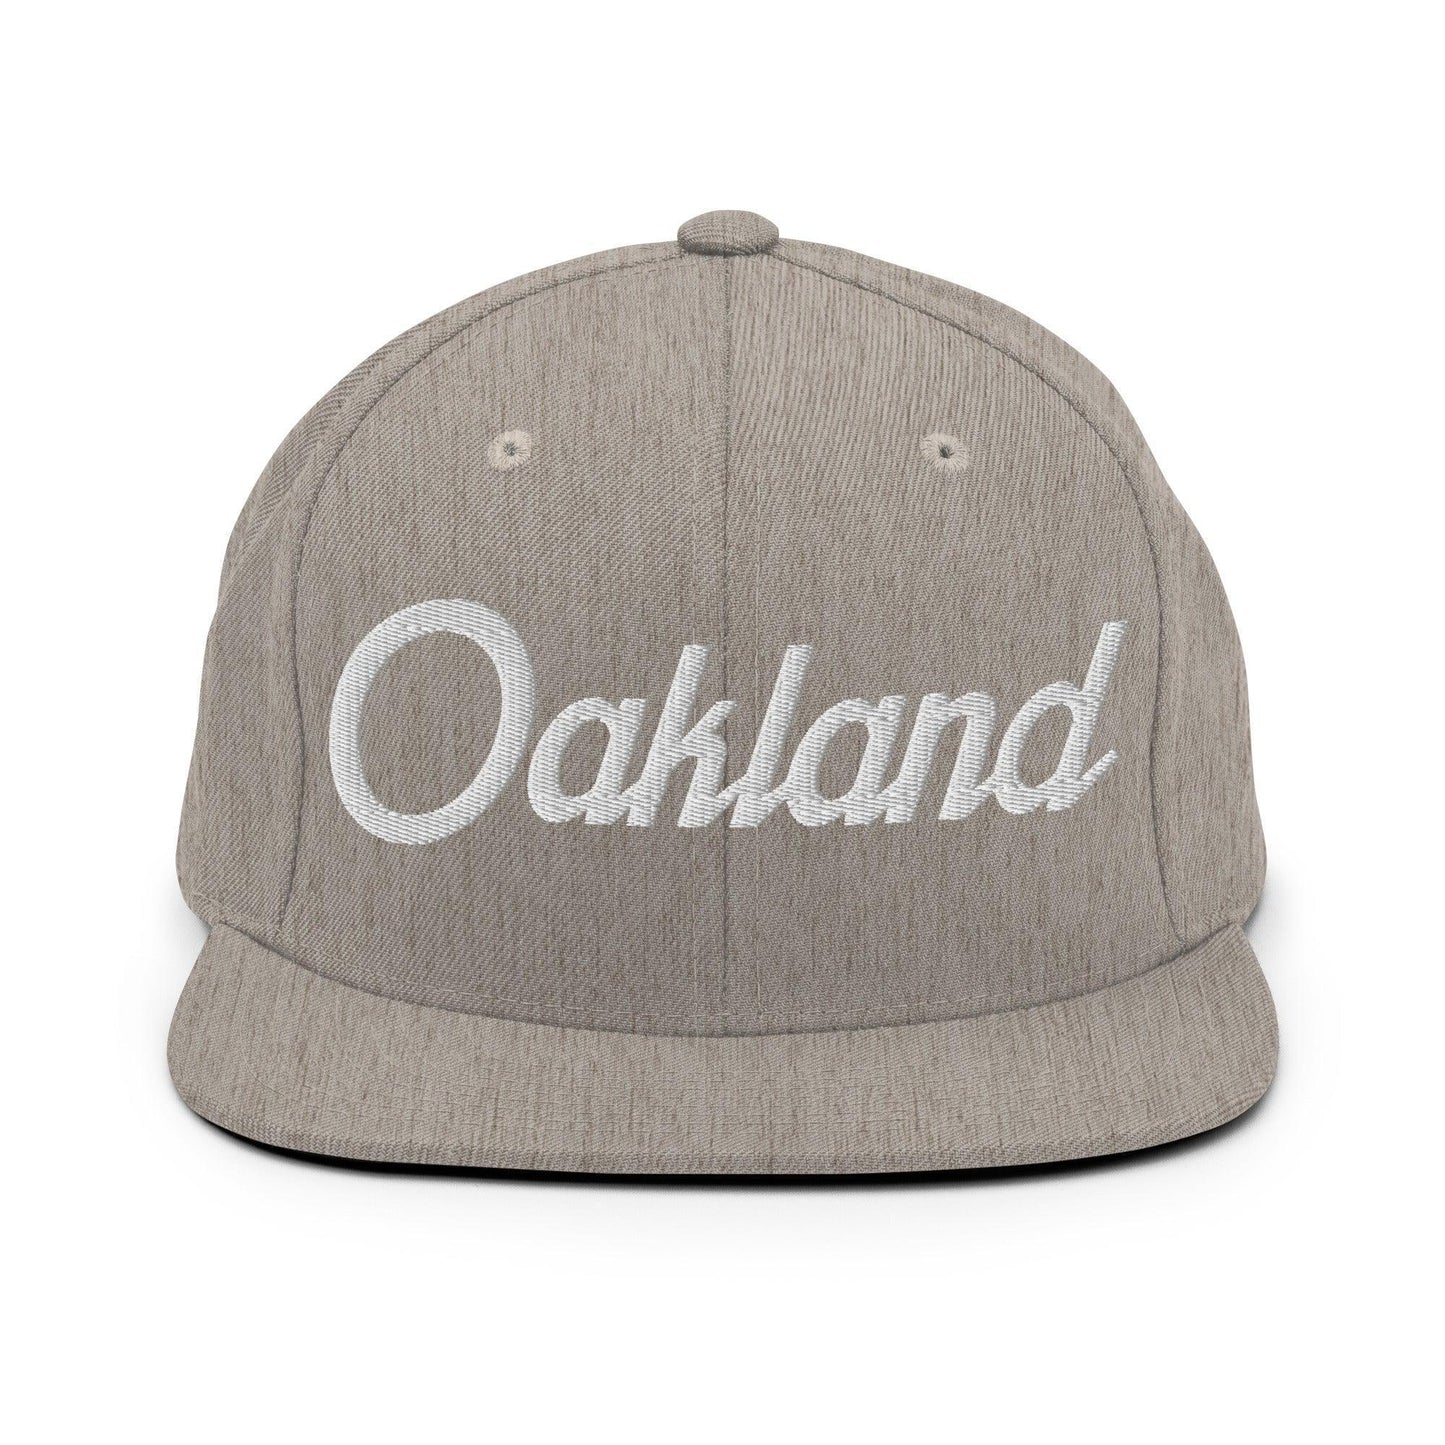 Oakland Script Snapback Hat Heather Grey